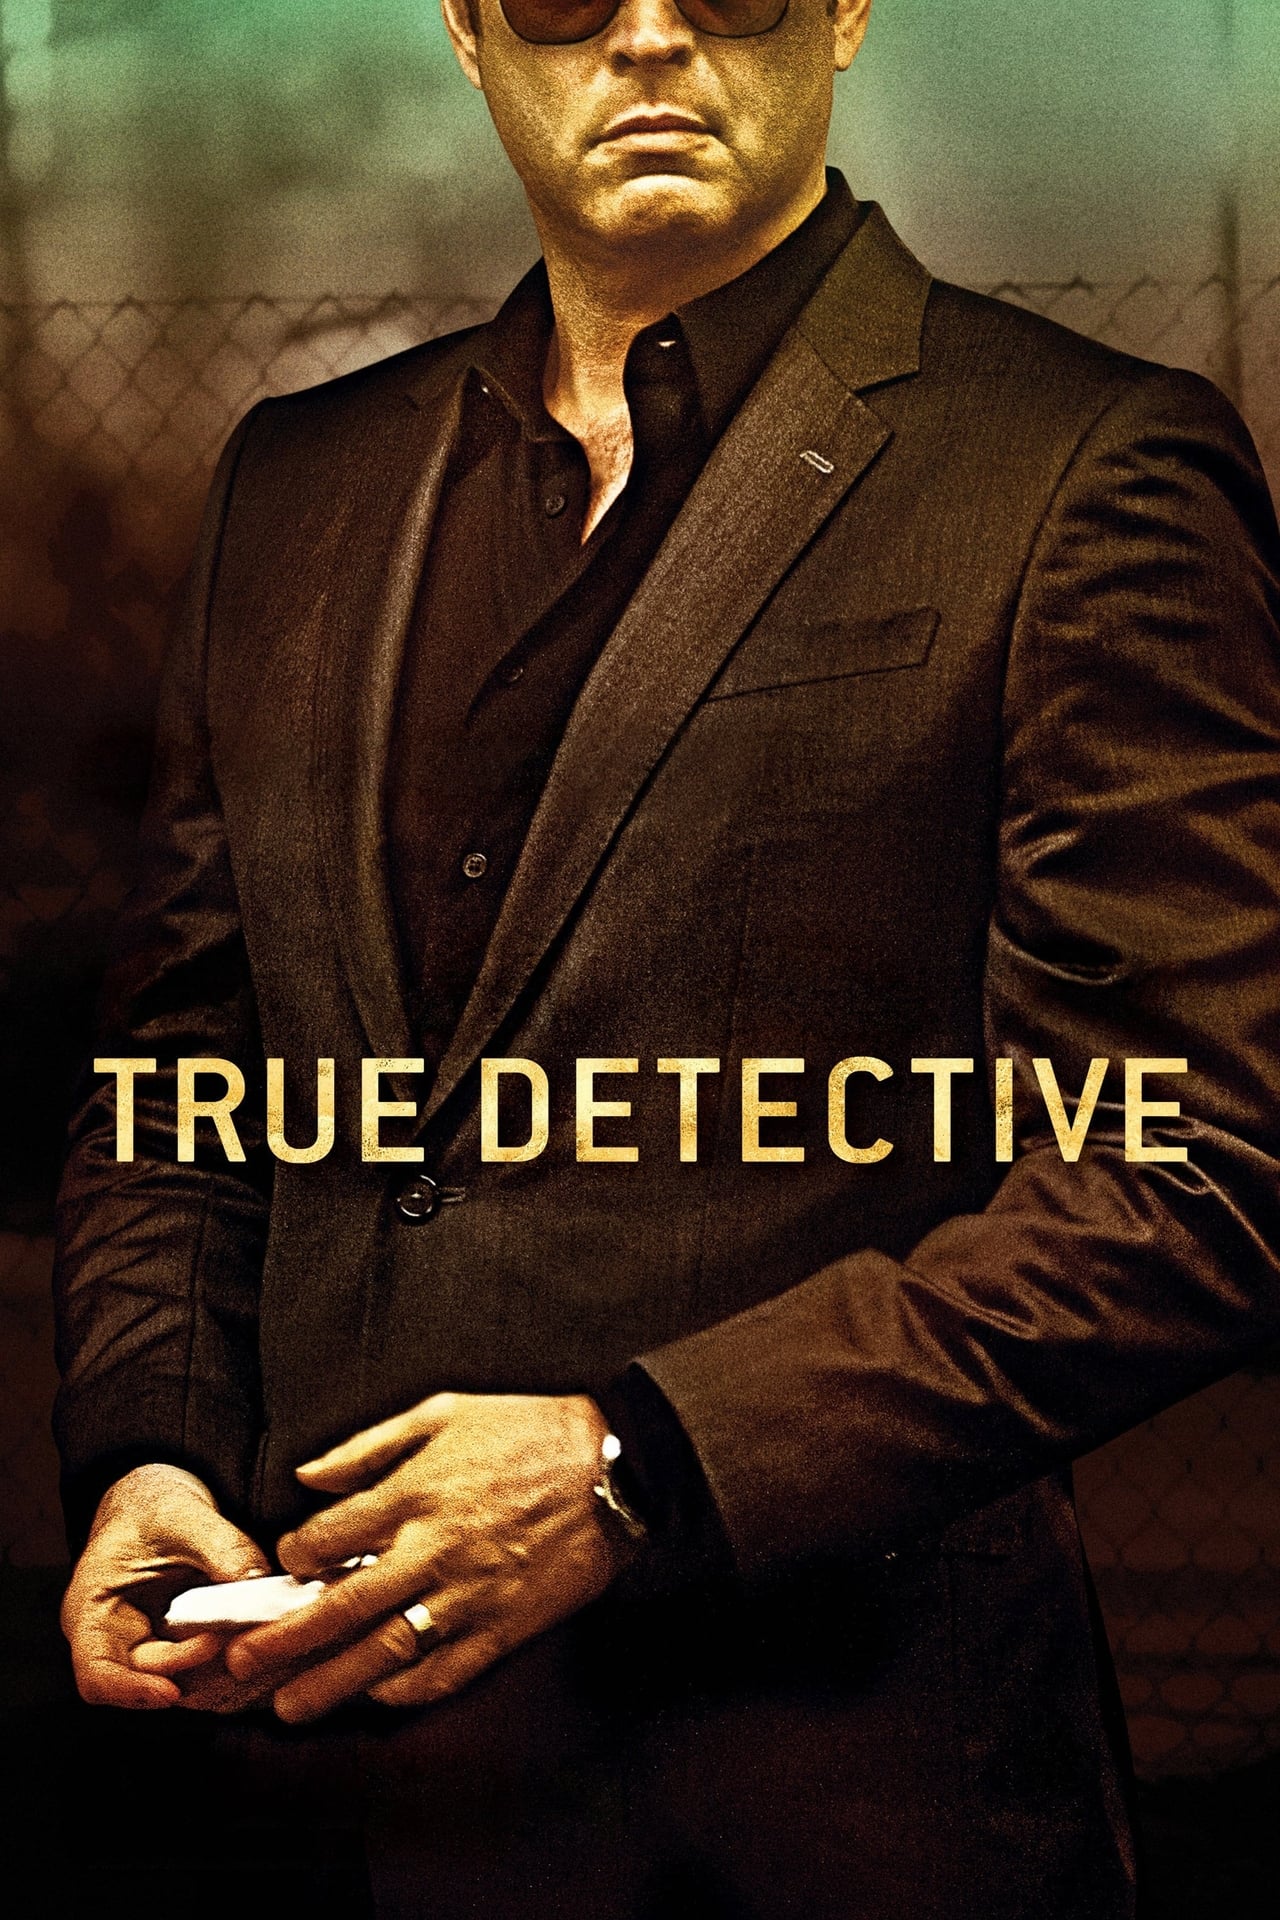 True Detective, Season 1 wiki, synopsis, reviews - Movies Rankings!